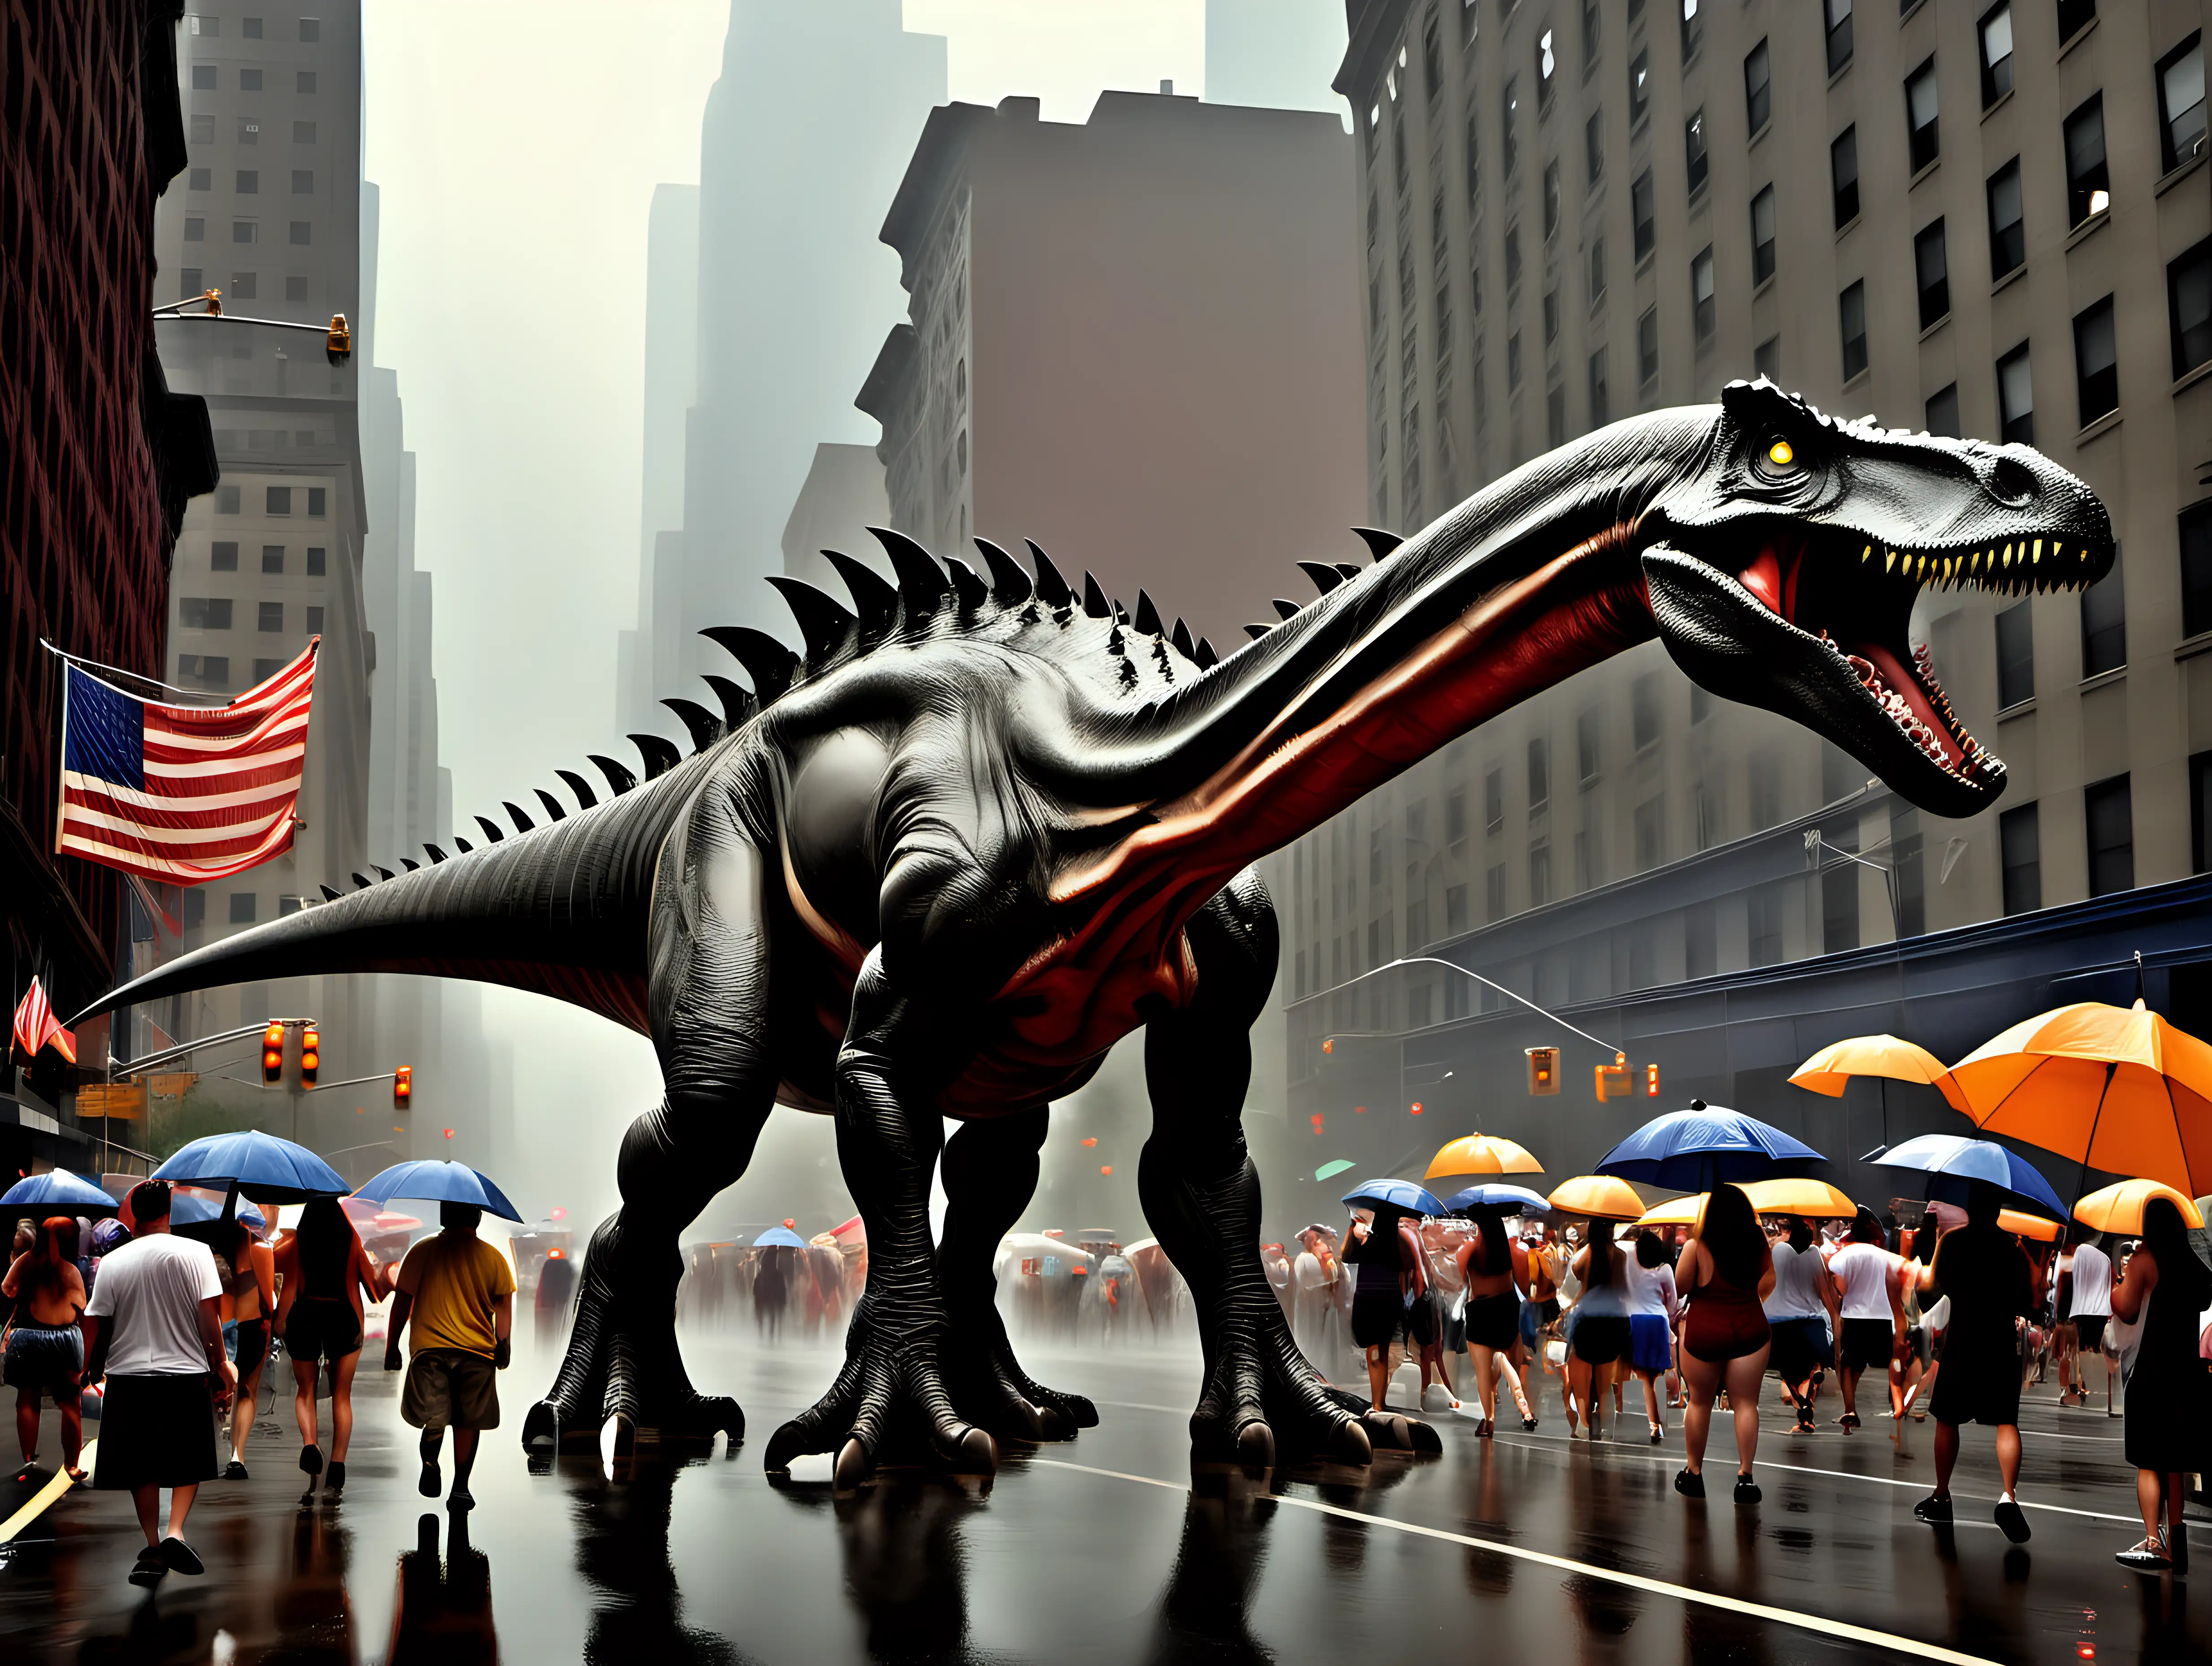 brontosaurus', pterodactyls, vampire bats, trolls, parading downtown NYC, summer rainstorm, Frank Frazetta style